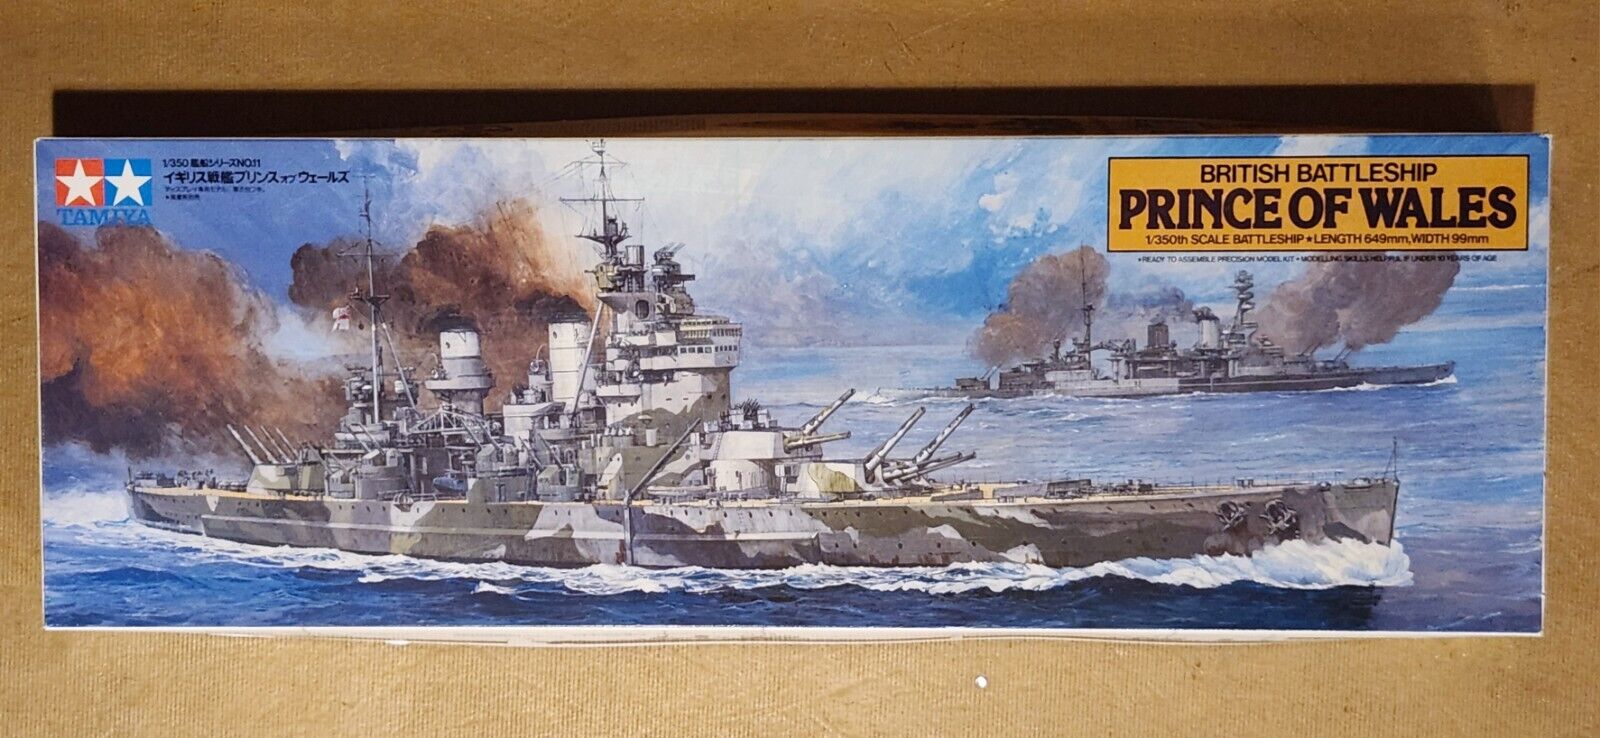 Tamiya British Battleship Prince of Wales No. 78011 1:350 Scale Model Kit 